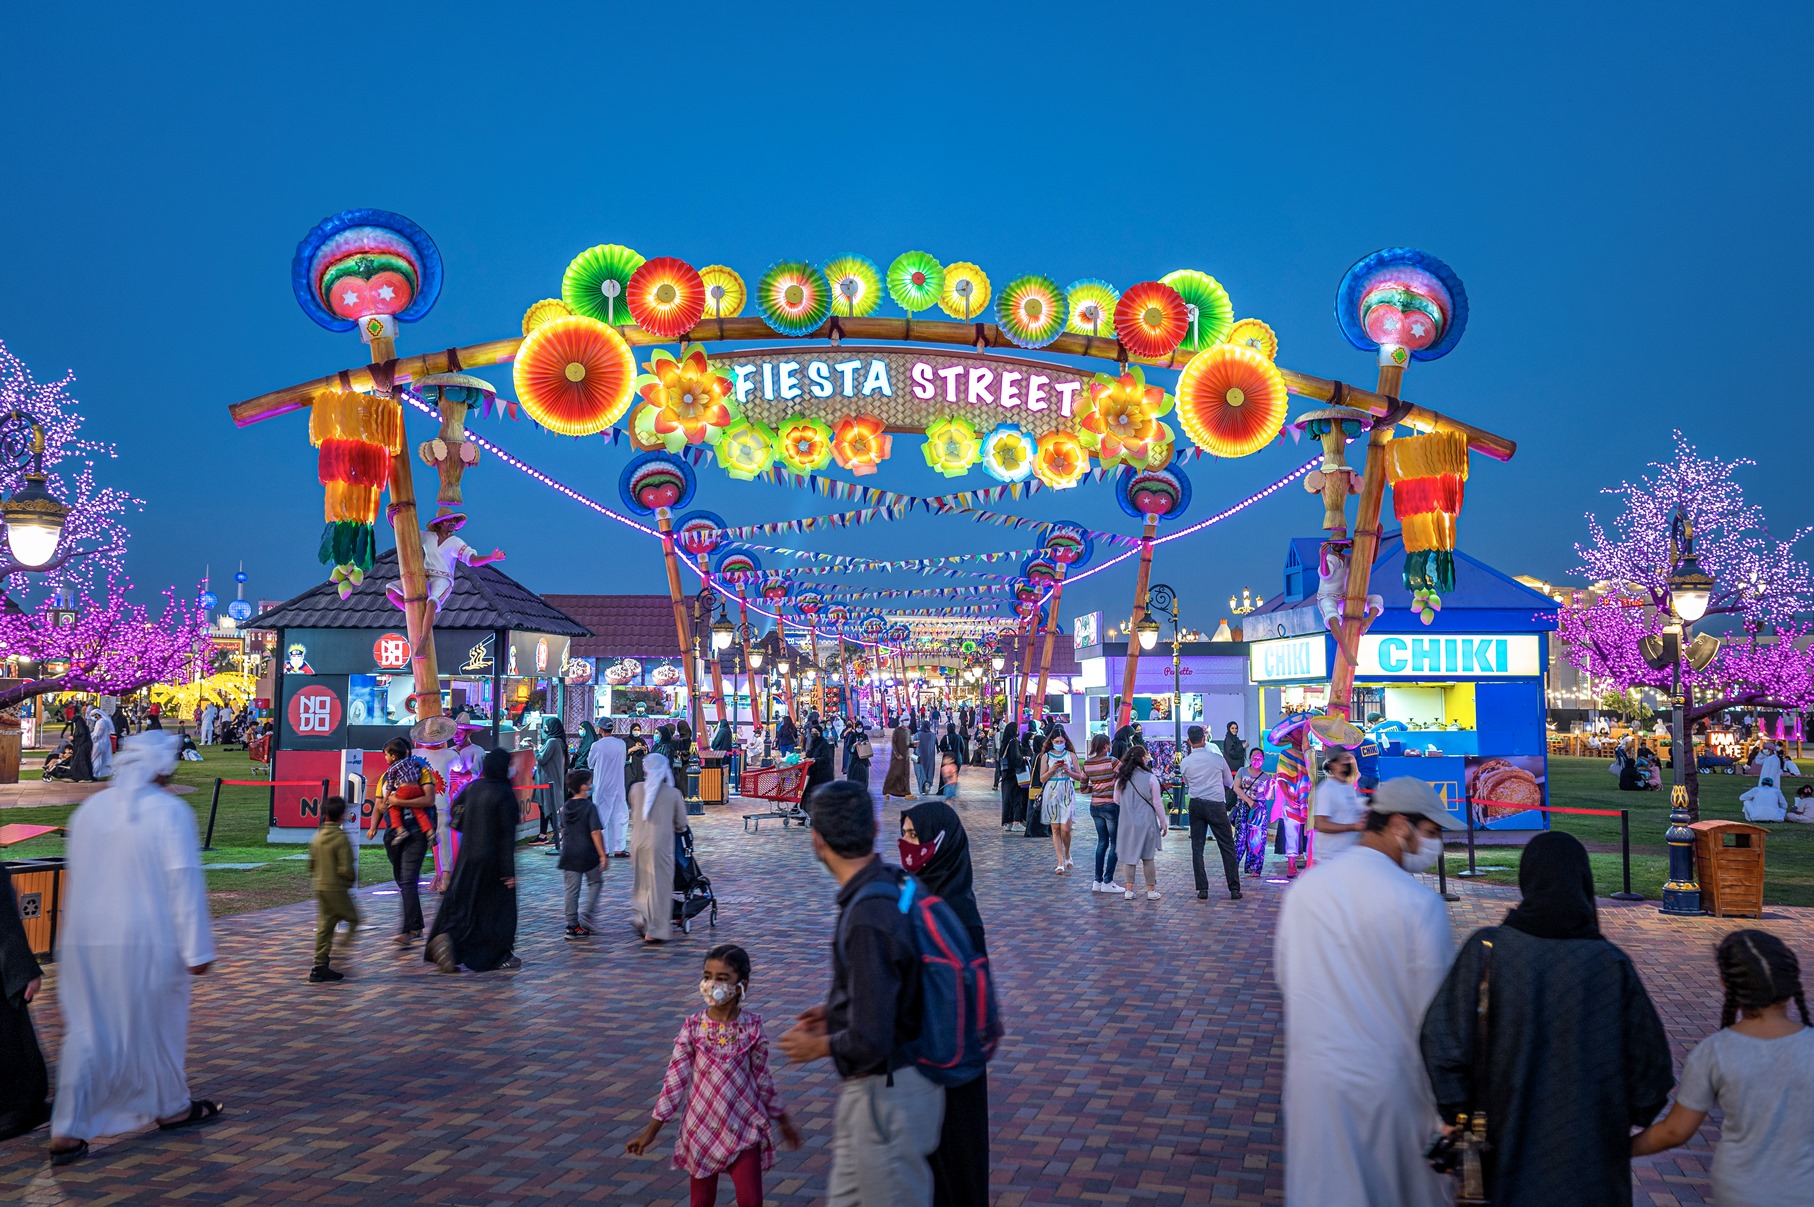 Global Village welcomes new street food kiosks and food cart concepts before season 26 – Dubai Blog